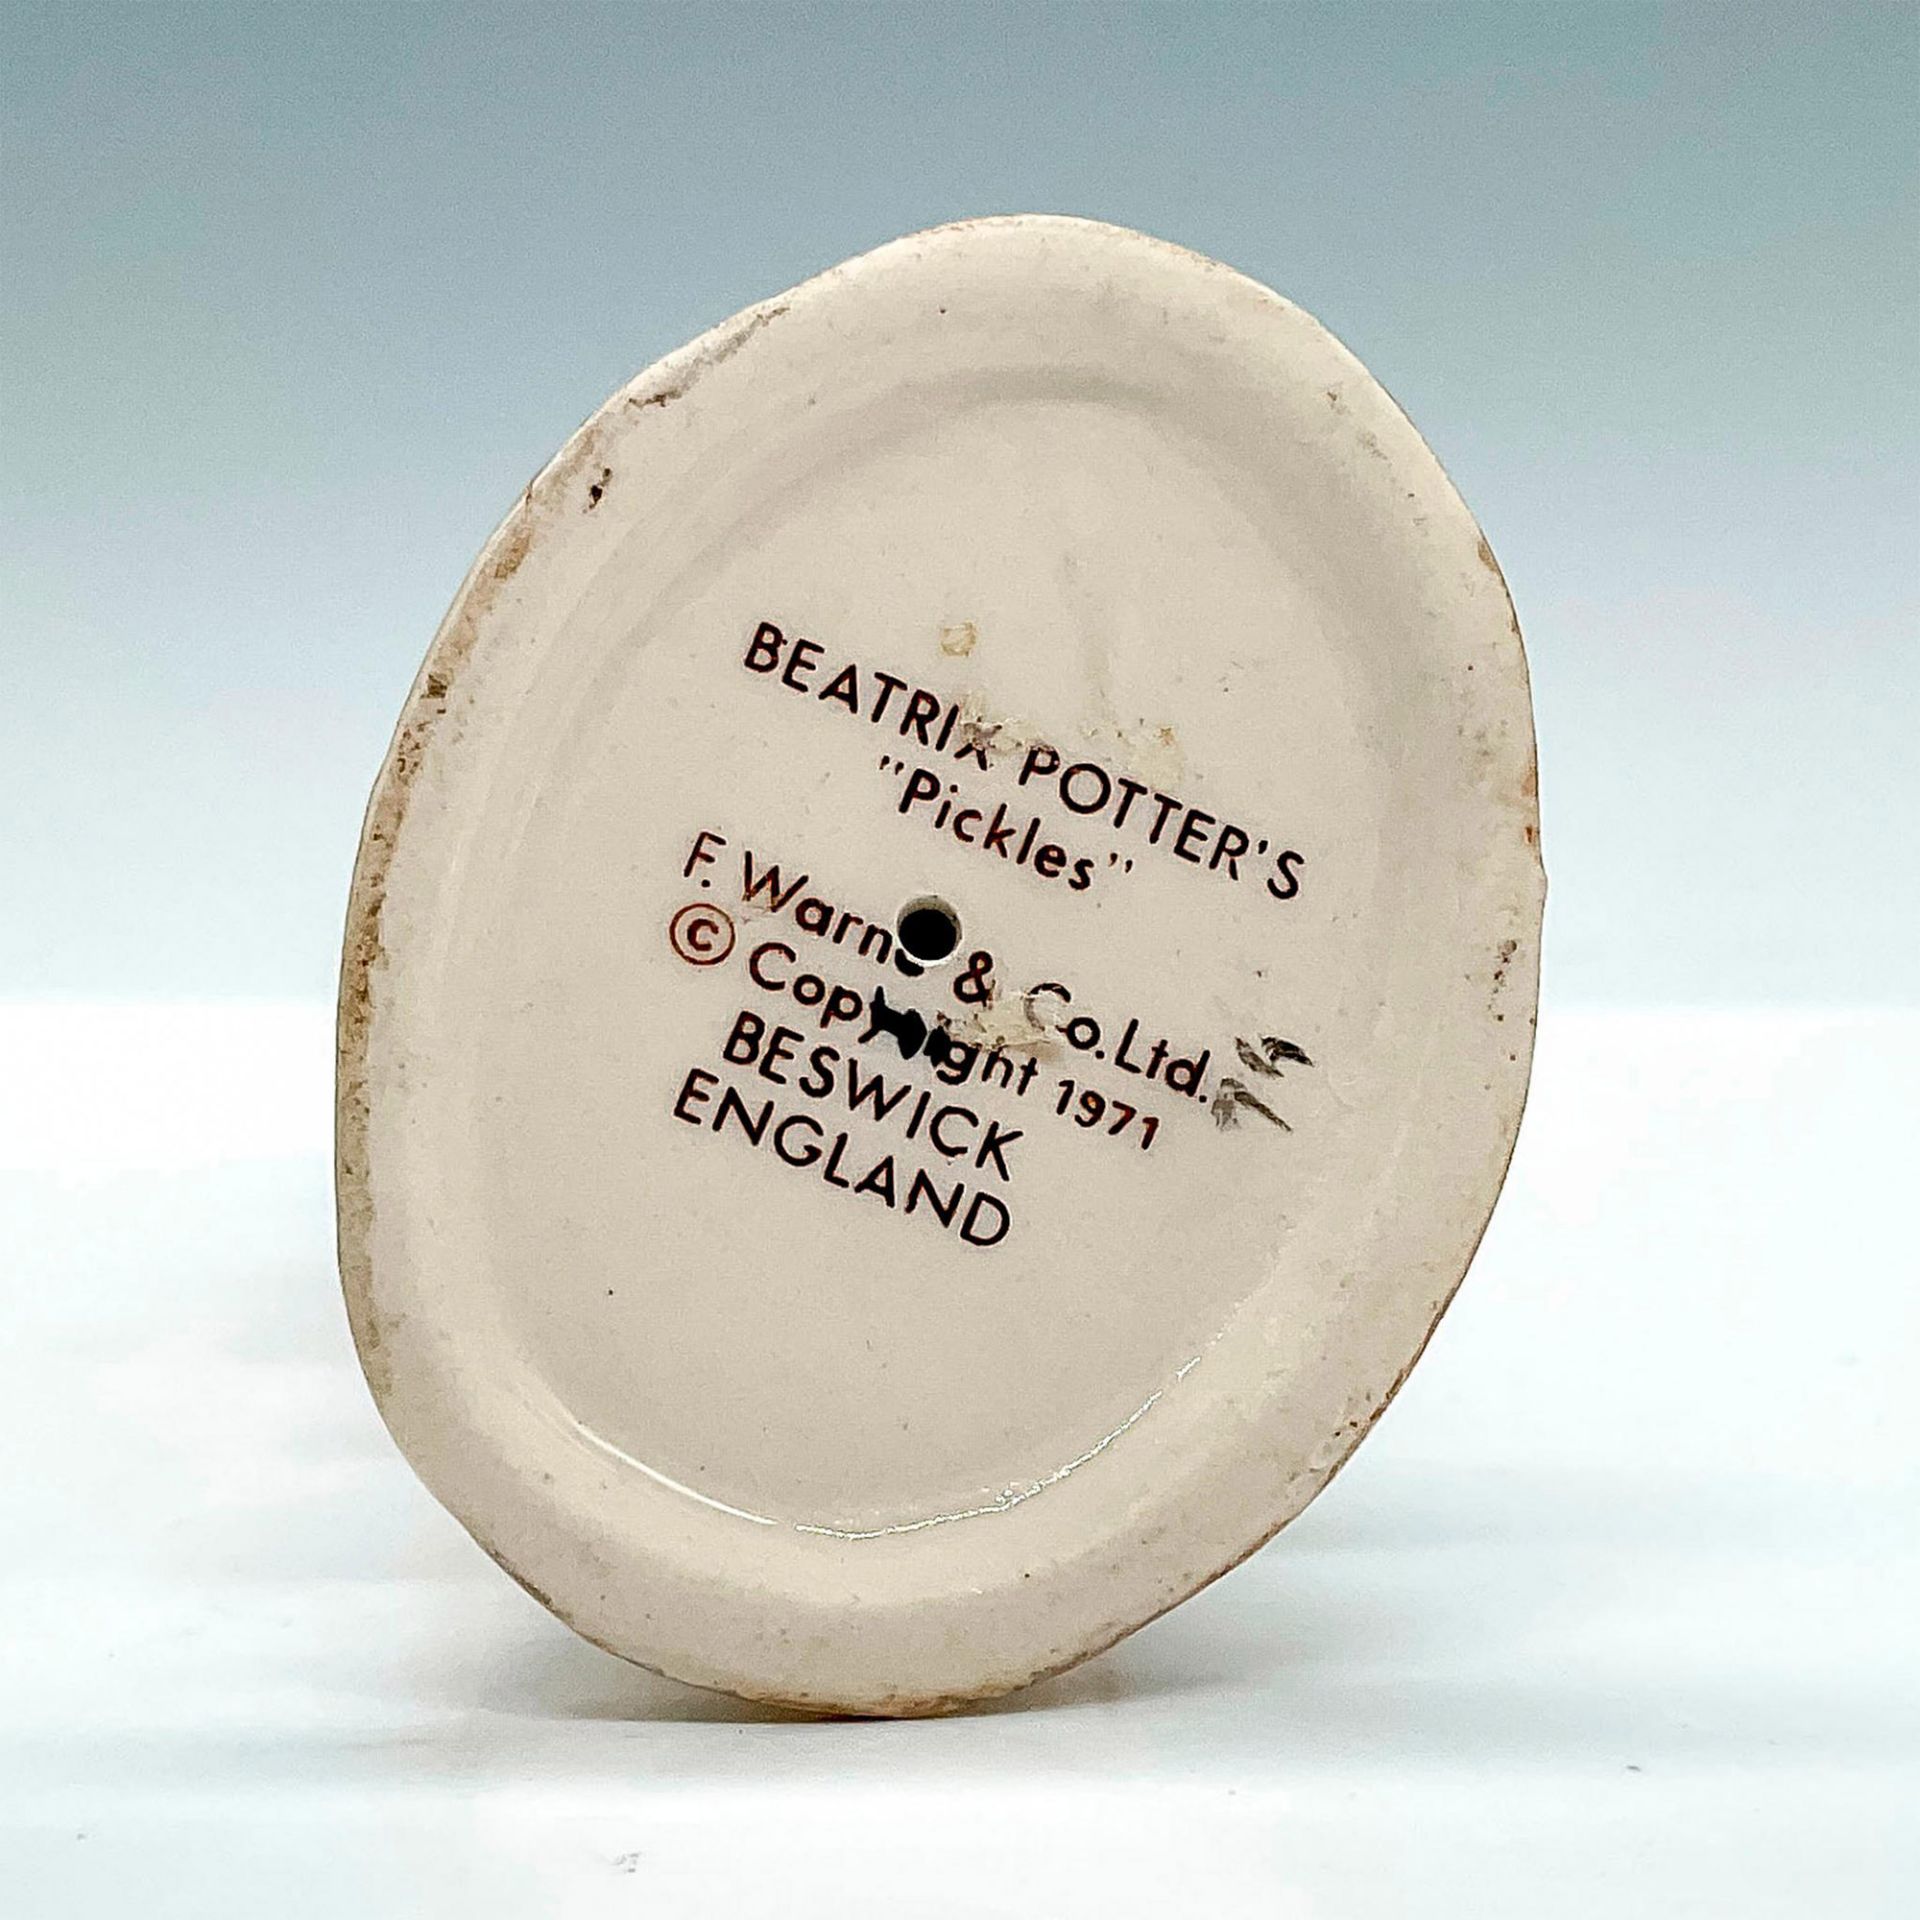 Beswick Beatrix Potter's Figurine, Pickles - Image 3 of 3